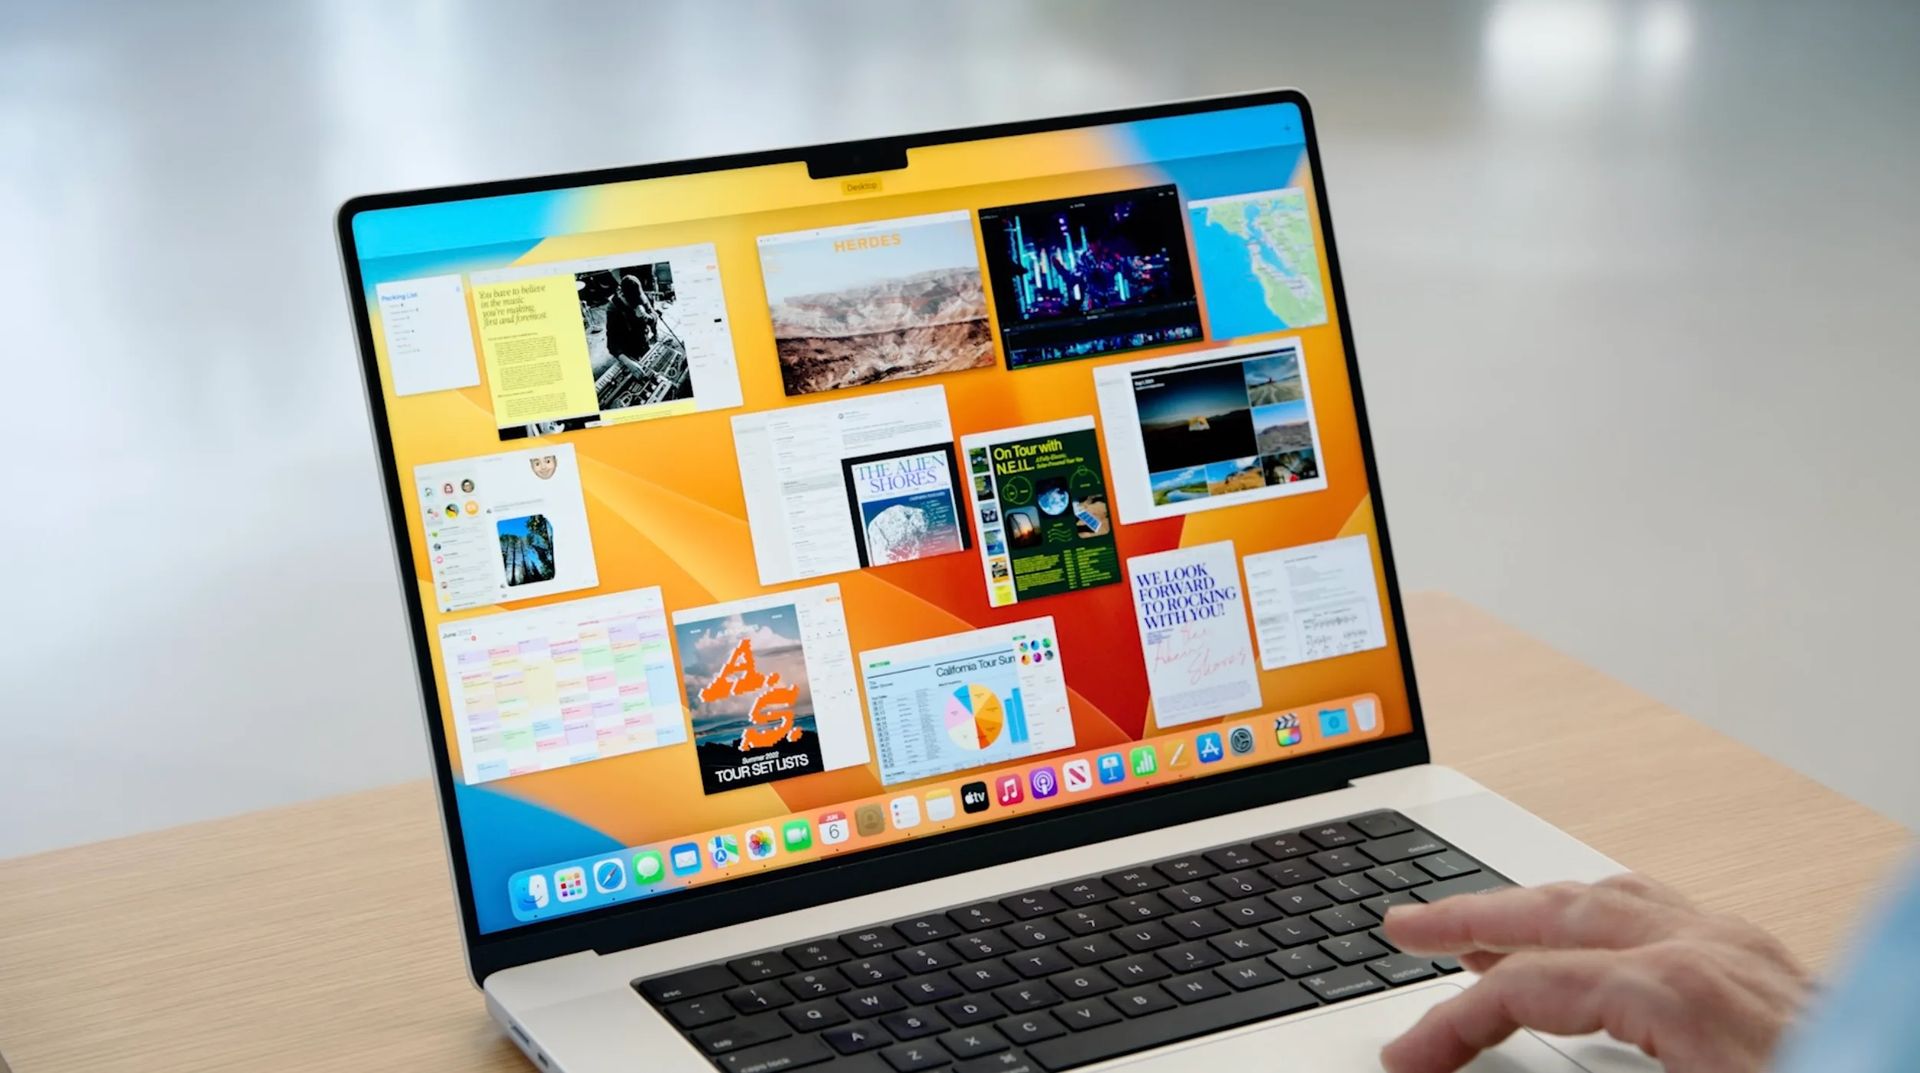 Apple macOS Ventura 13.1 brings in new features